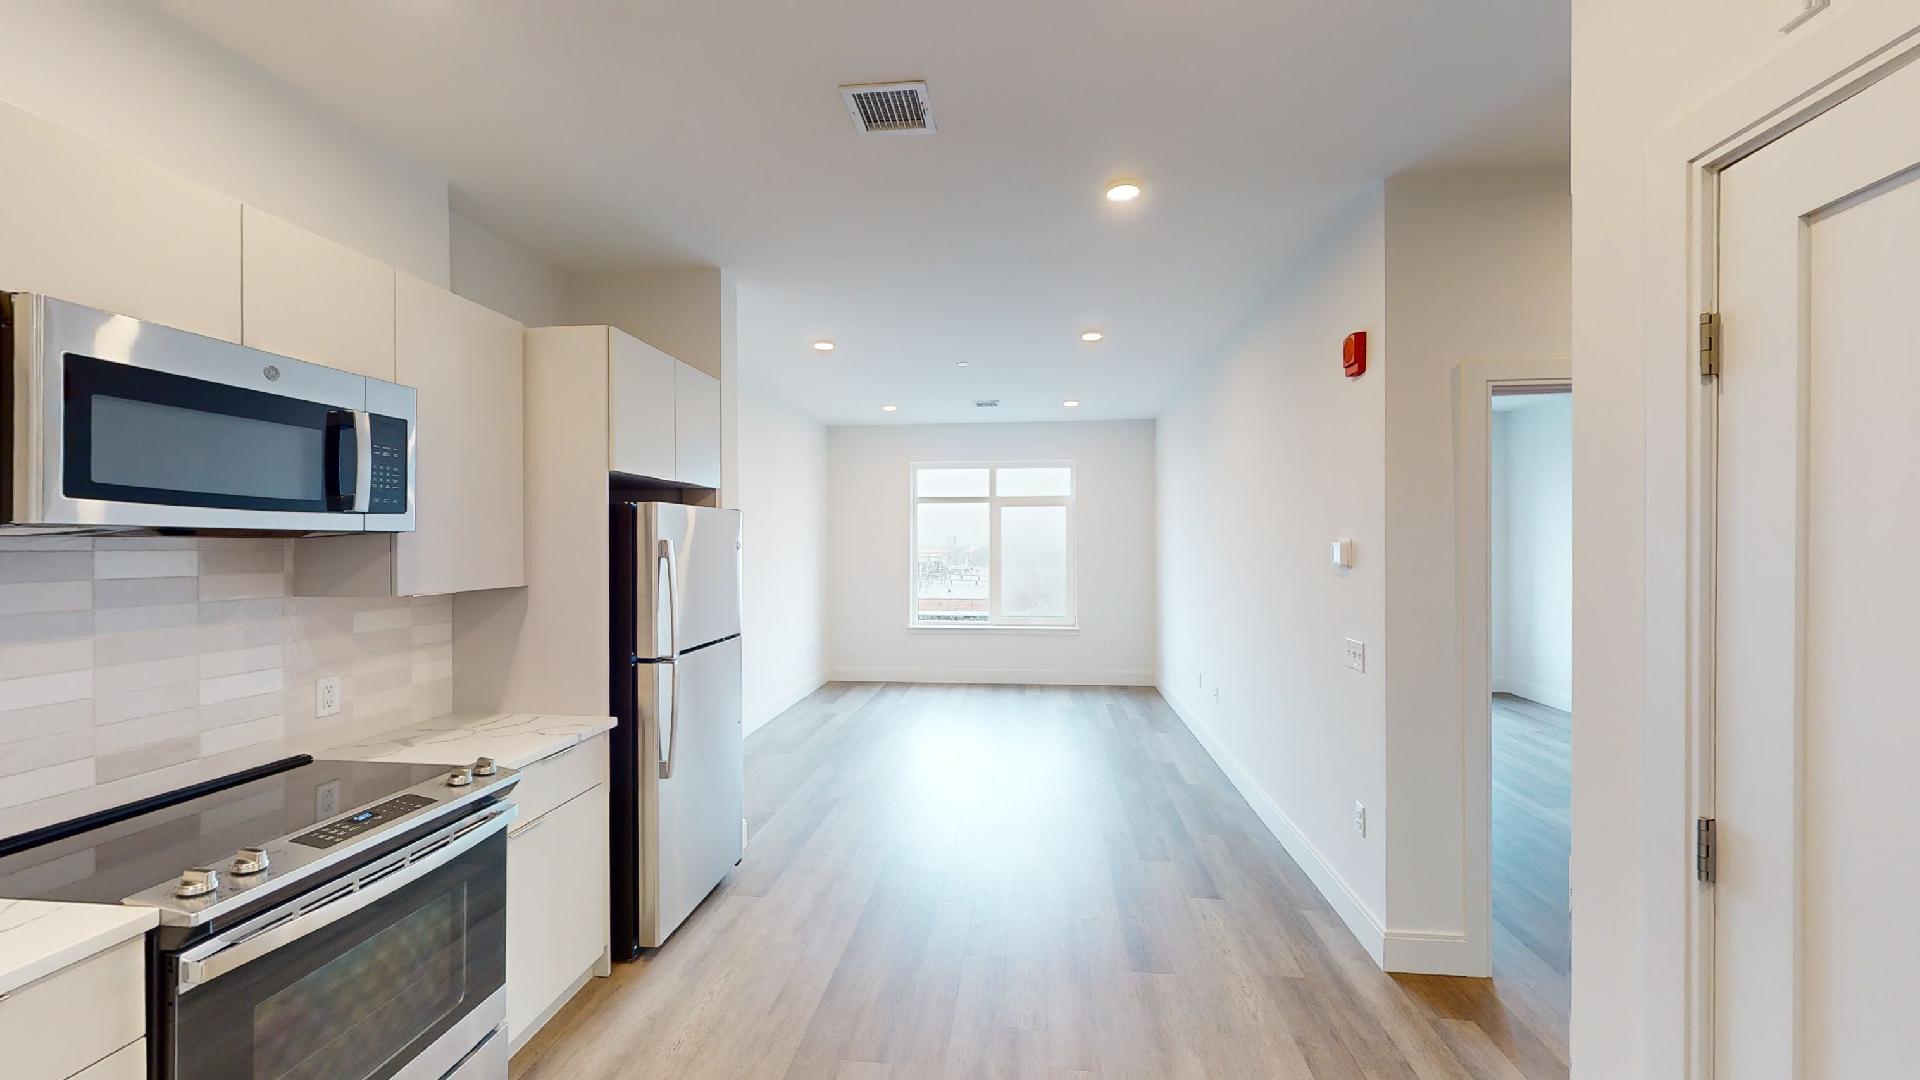 Photos of apartment on Coleman,Boston MA 02125